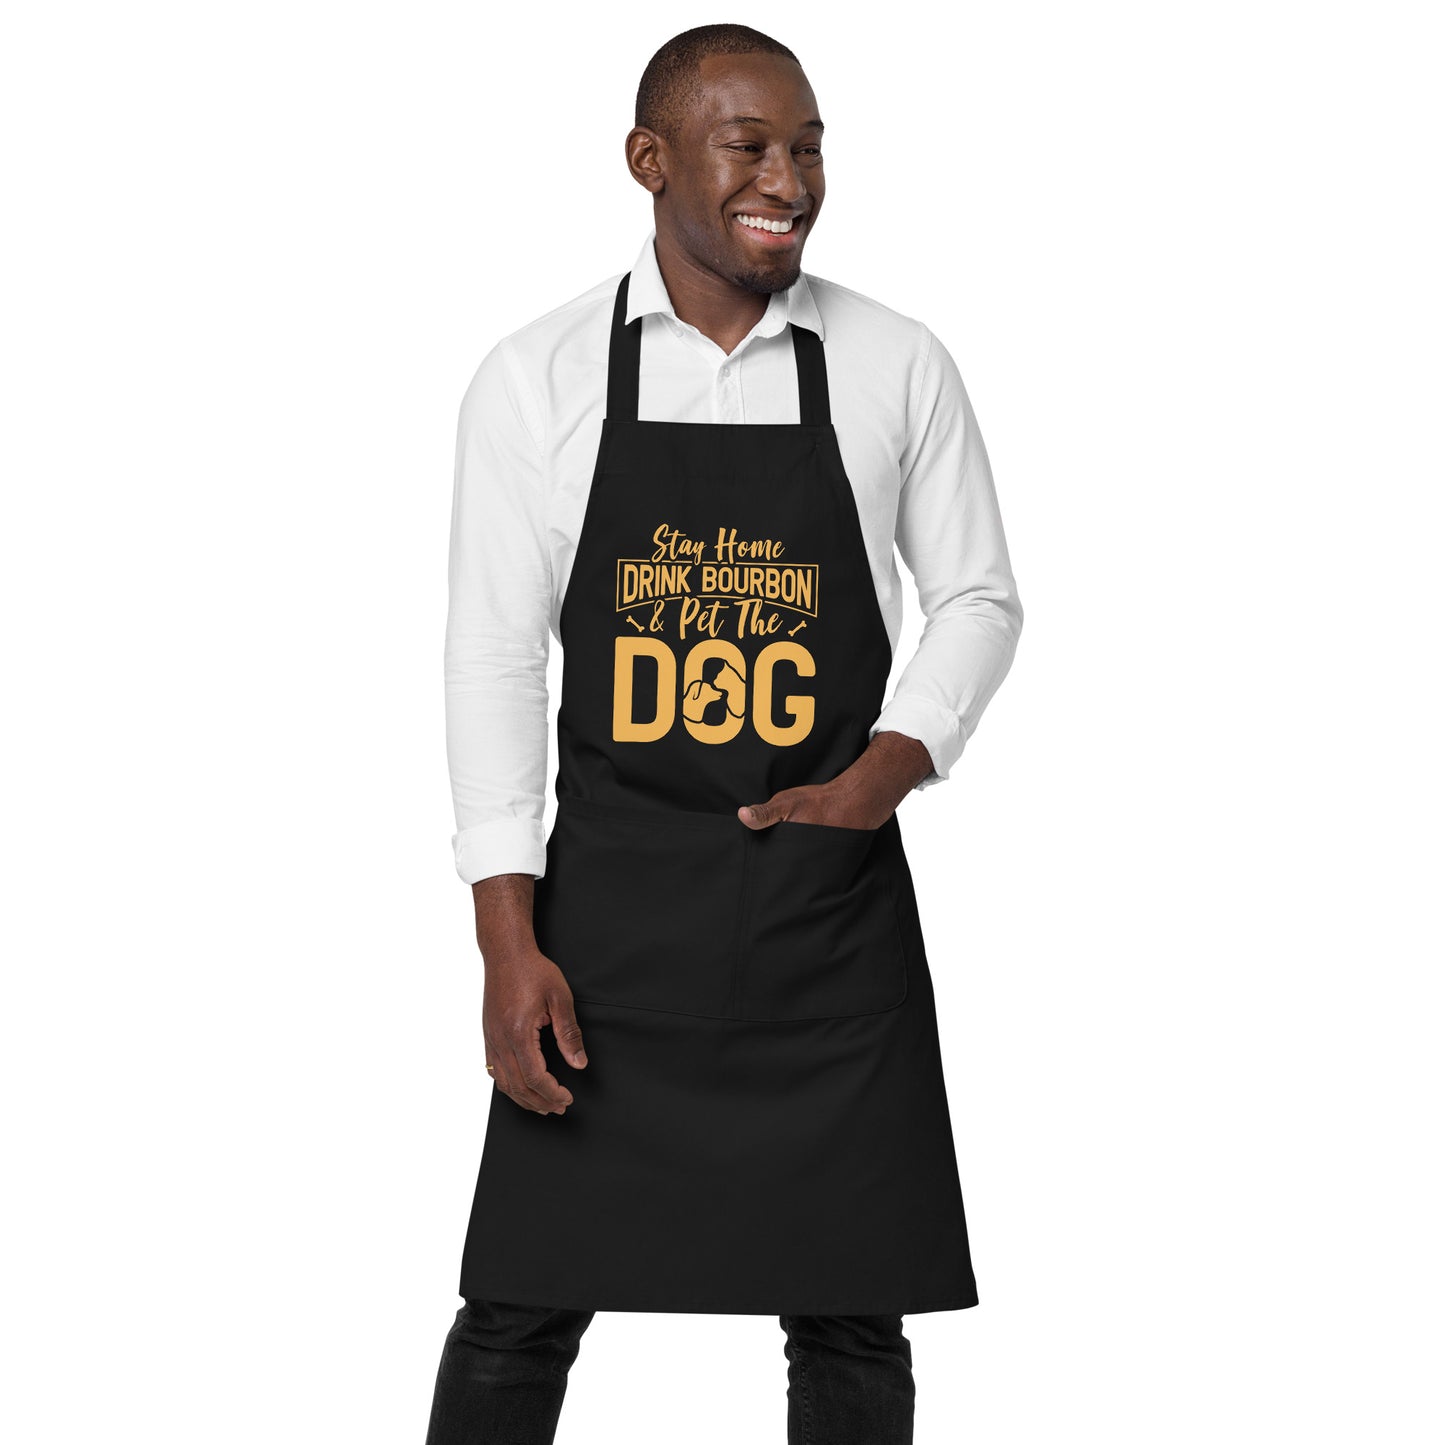 Stay Home Drink Bourbon Pet the Dog Organic cotton apron